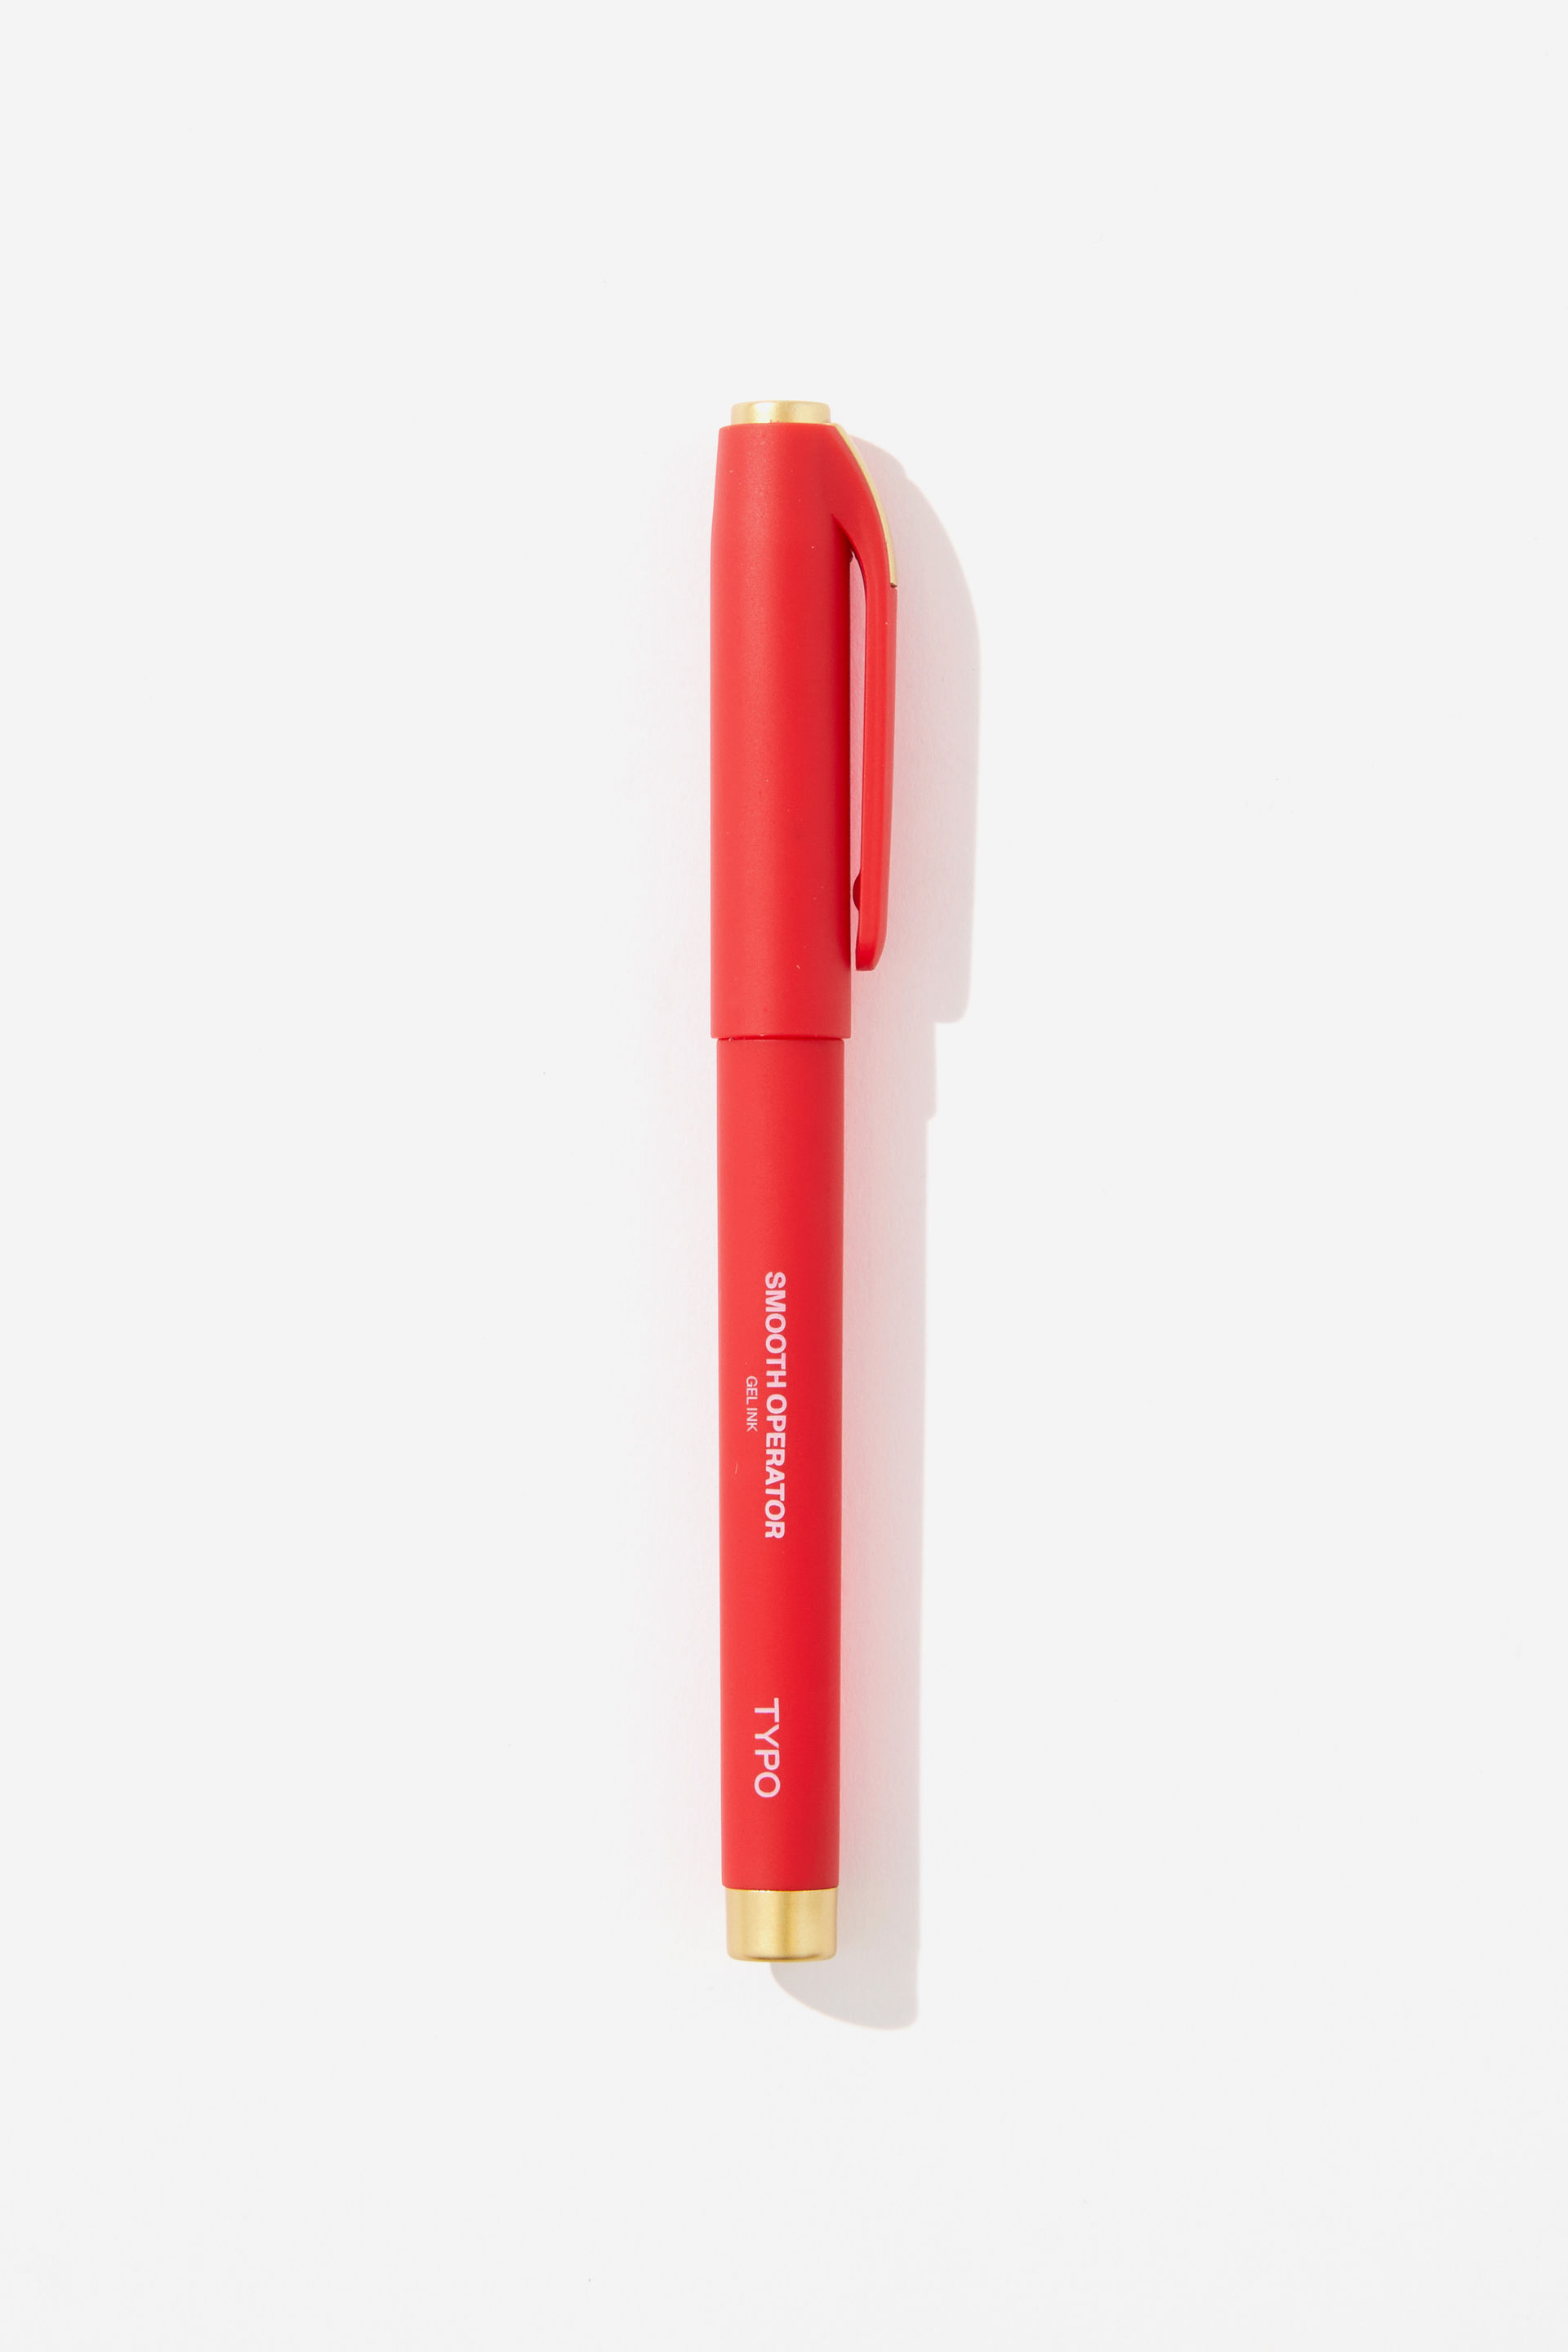 Typo - Smooth Operator Gel Pen - Red